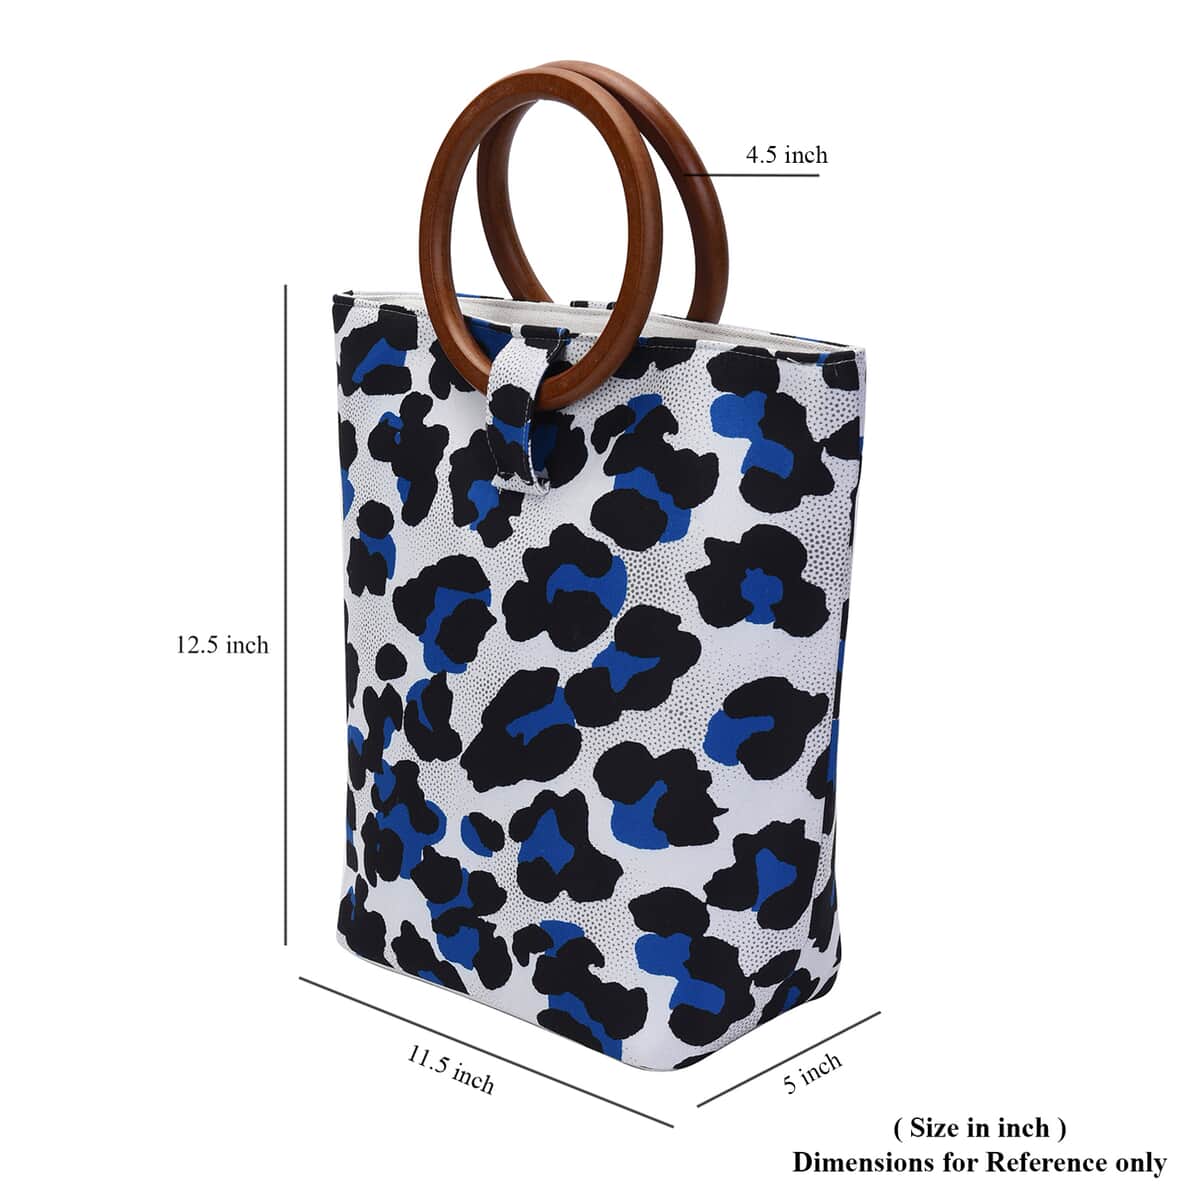 Black Leopard Print Tote Bag